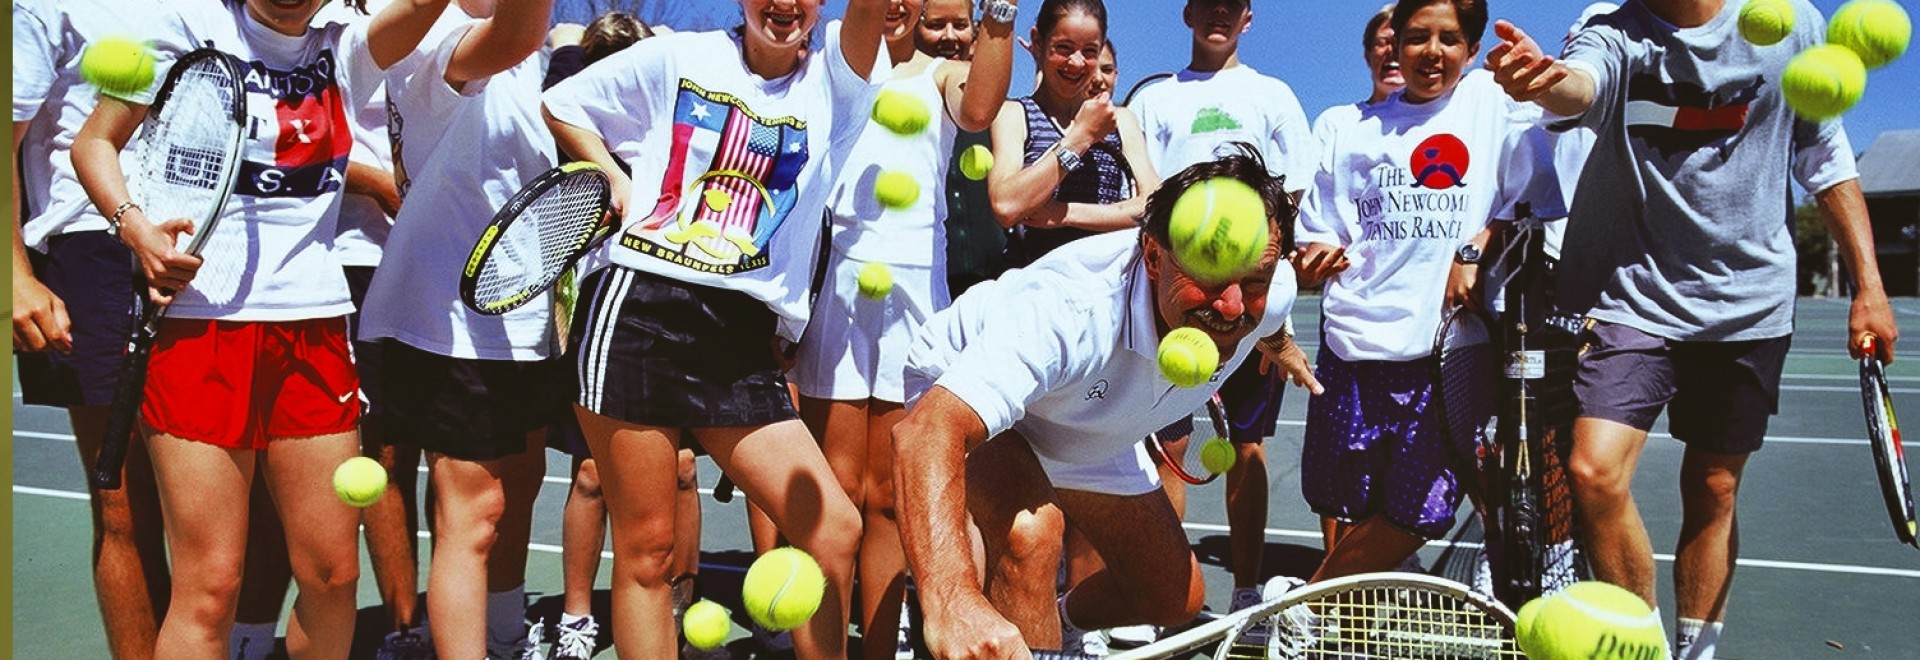 3-Week Junior Summer Tennis Academy  - John Newcombe Tennis Ranch, Texas